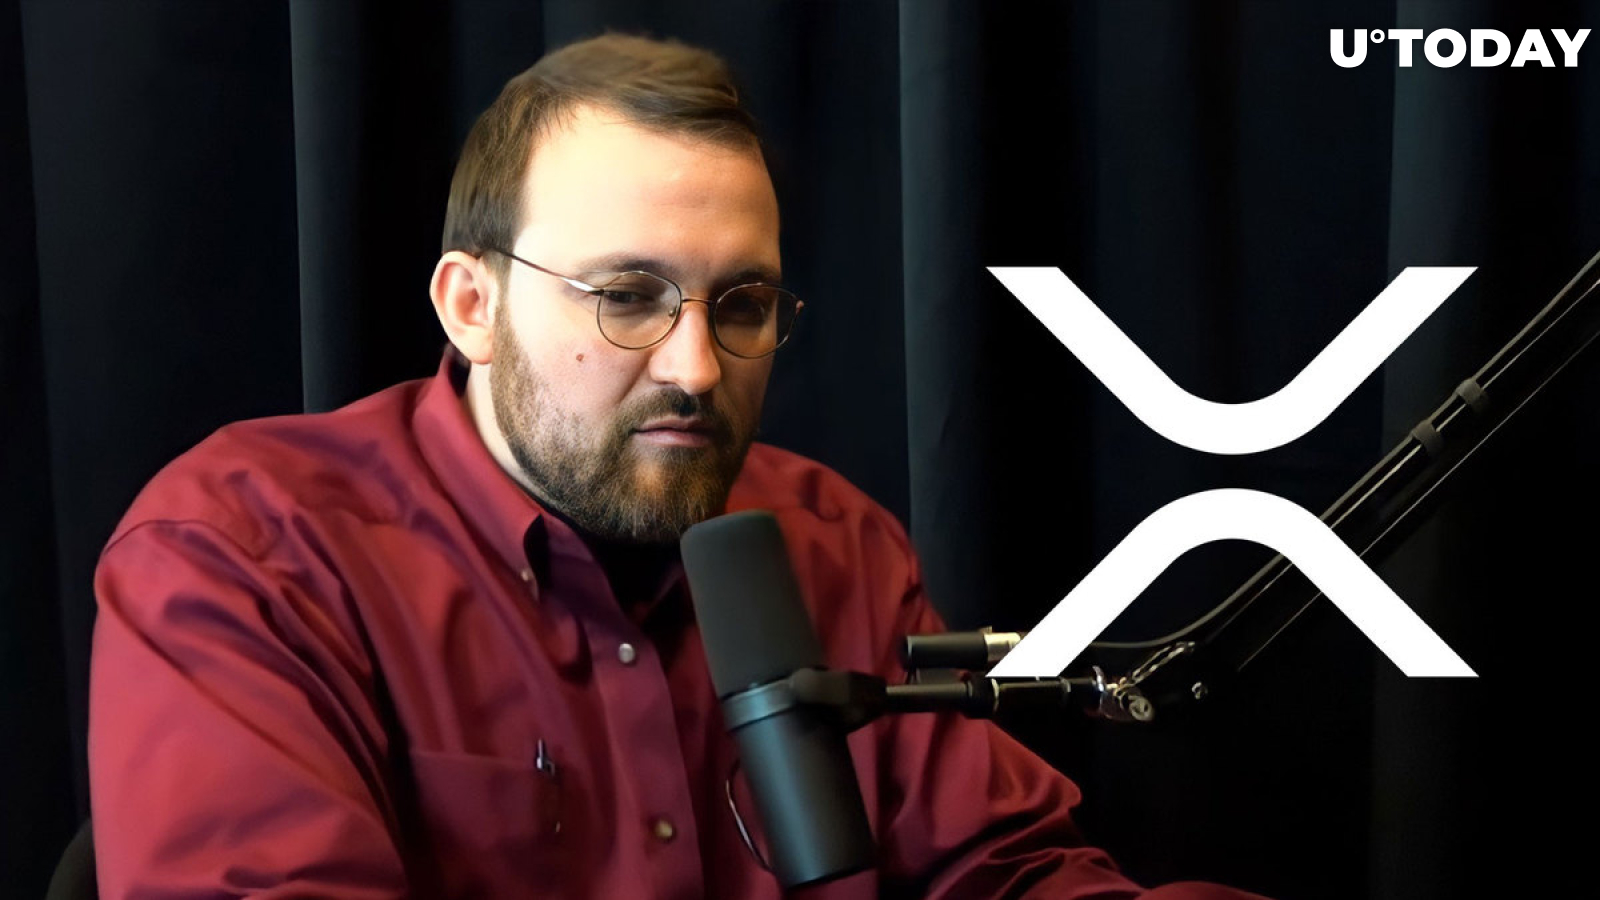 Cardano Founder Says XRP Community Mocks and Hates Him